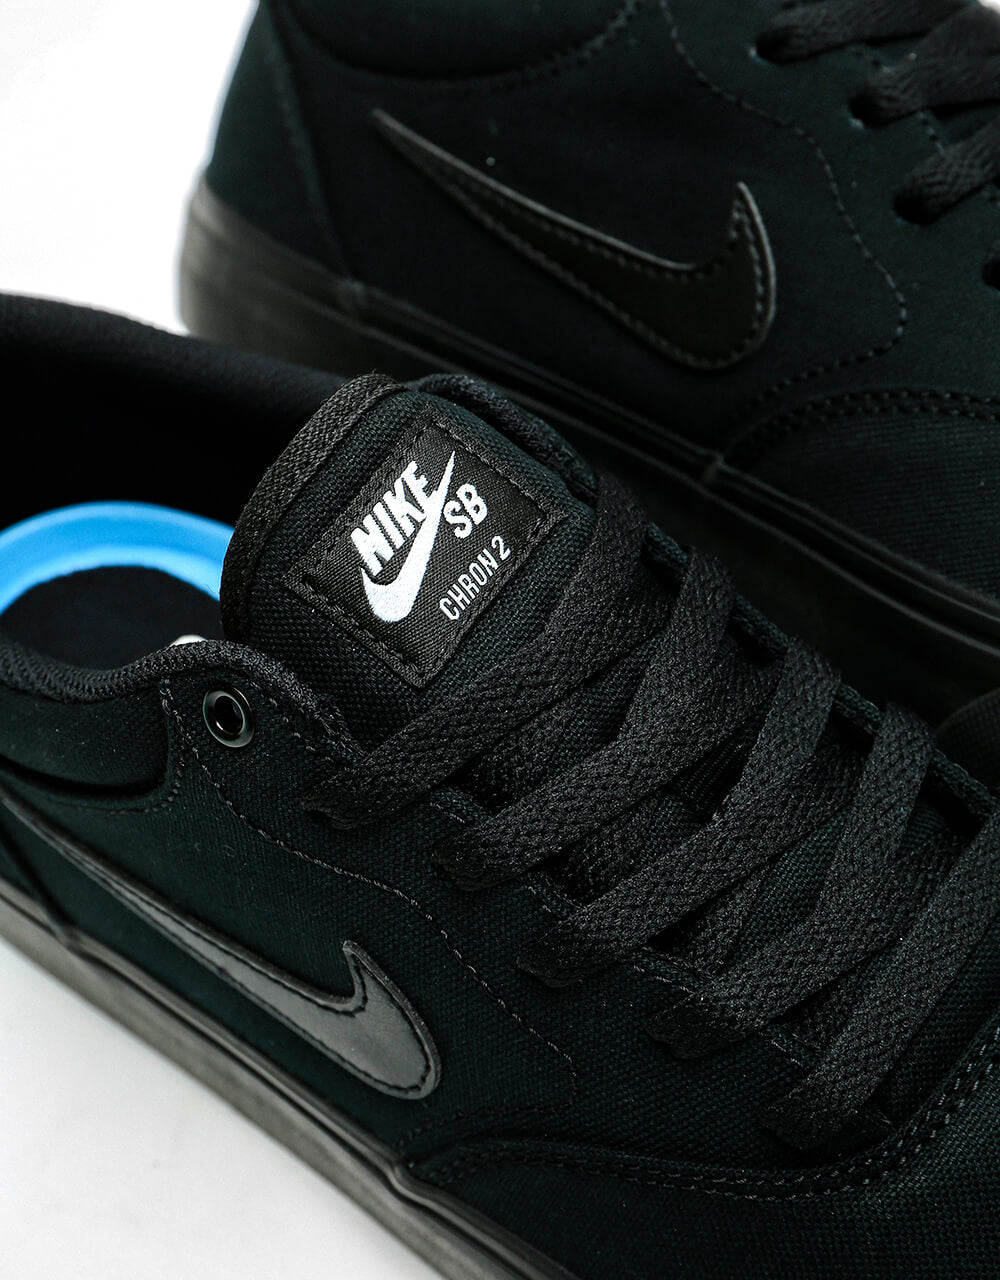 Nike SB Chron 2 Canvas Skate Shoes - Black/Black-Black